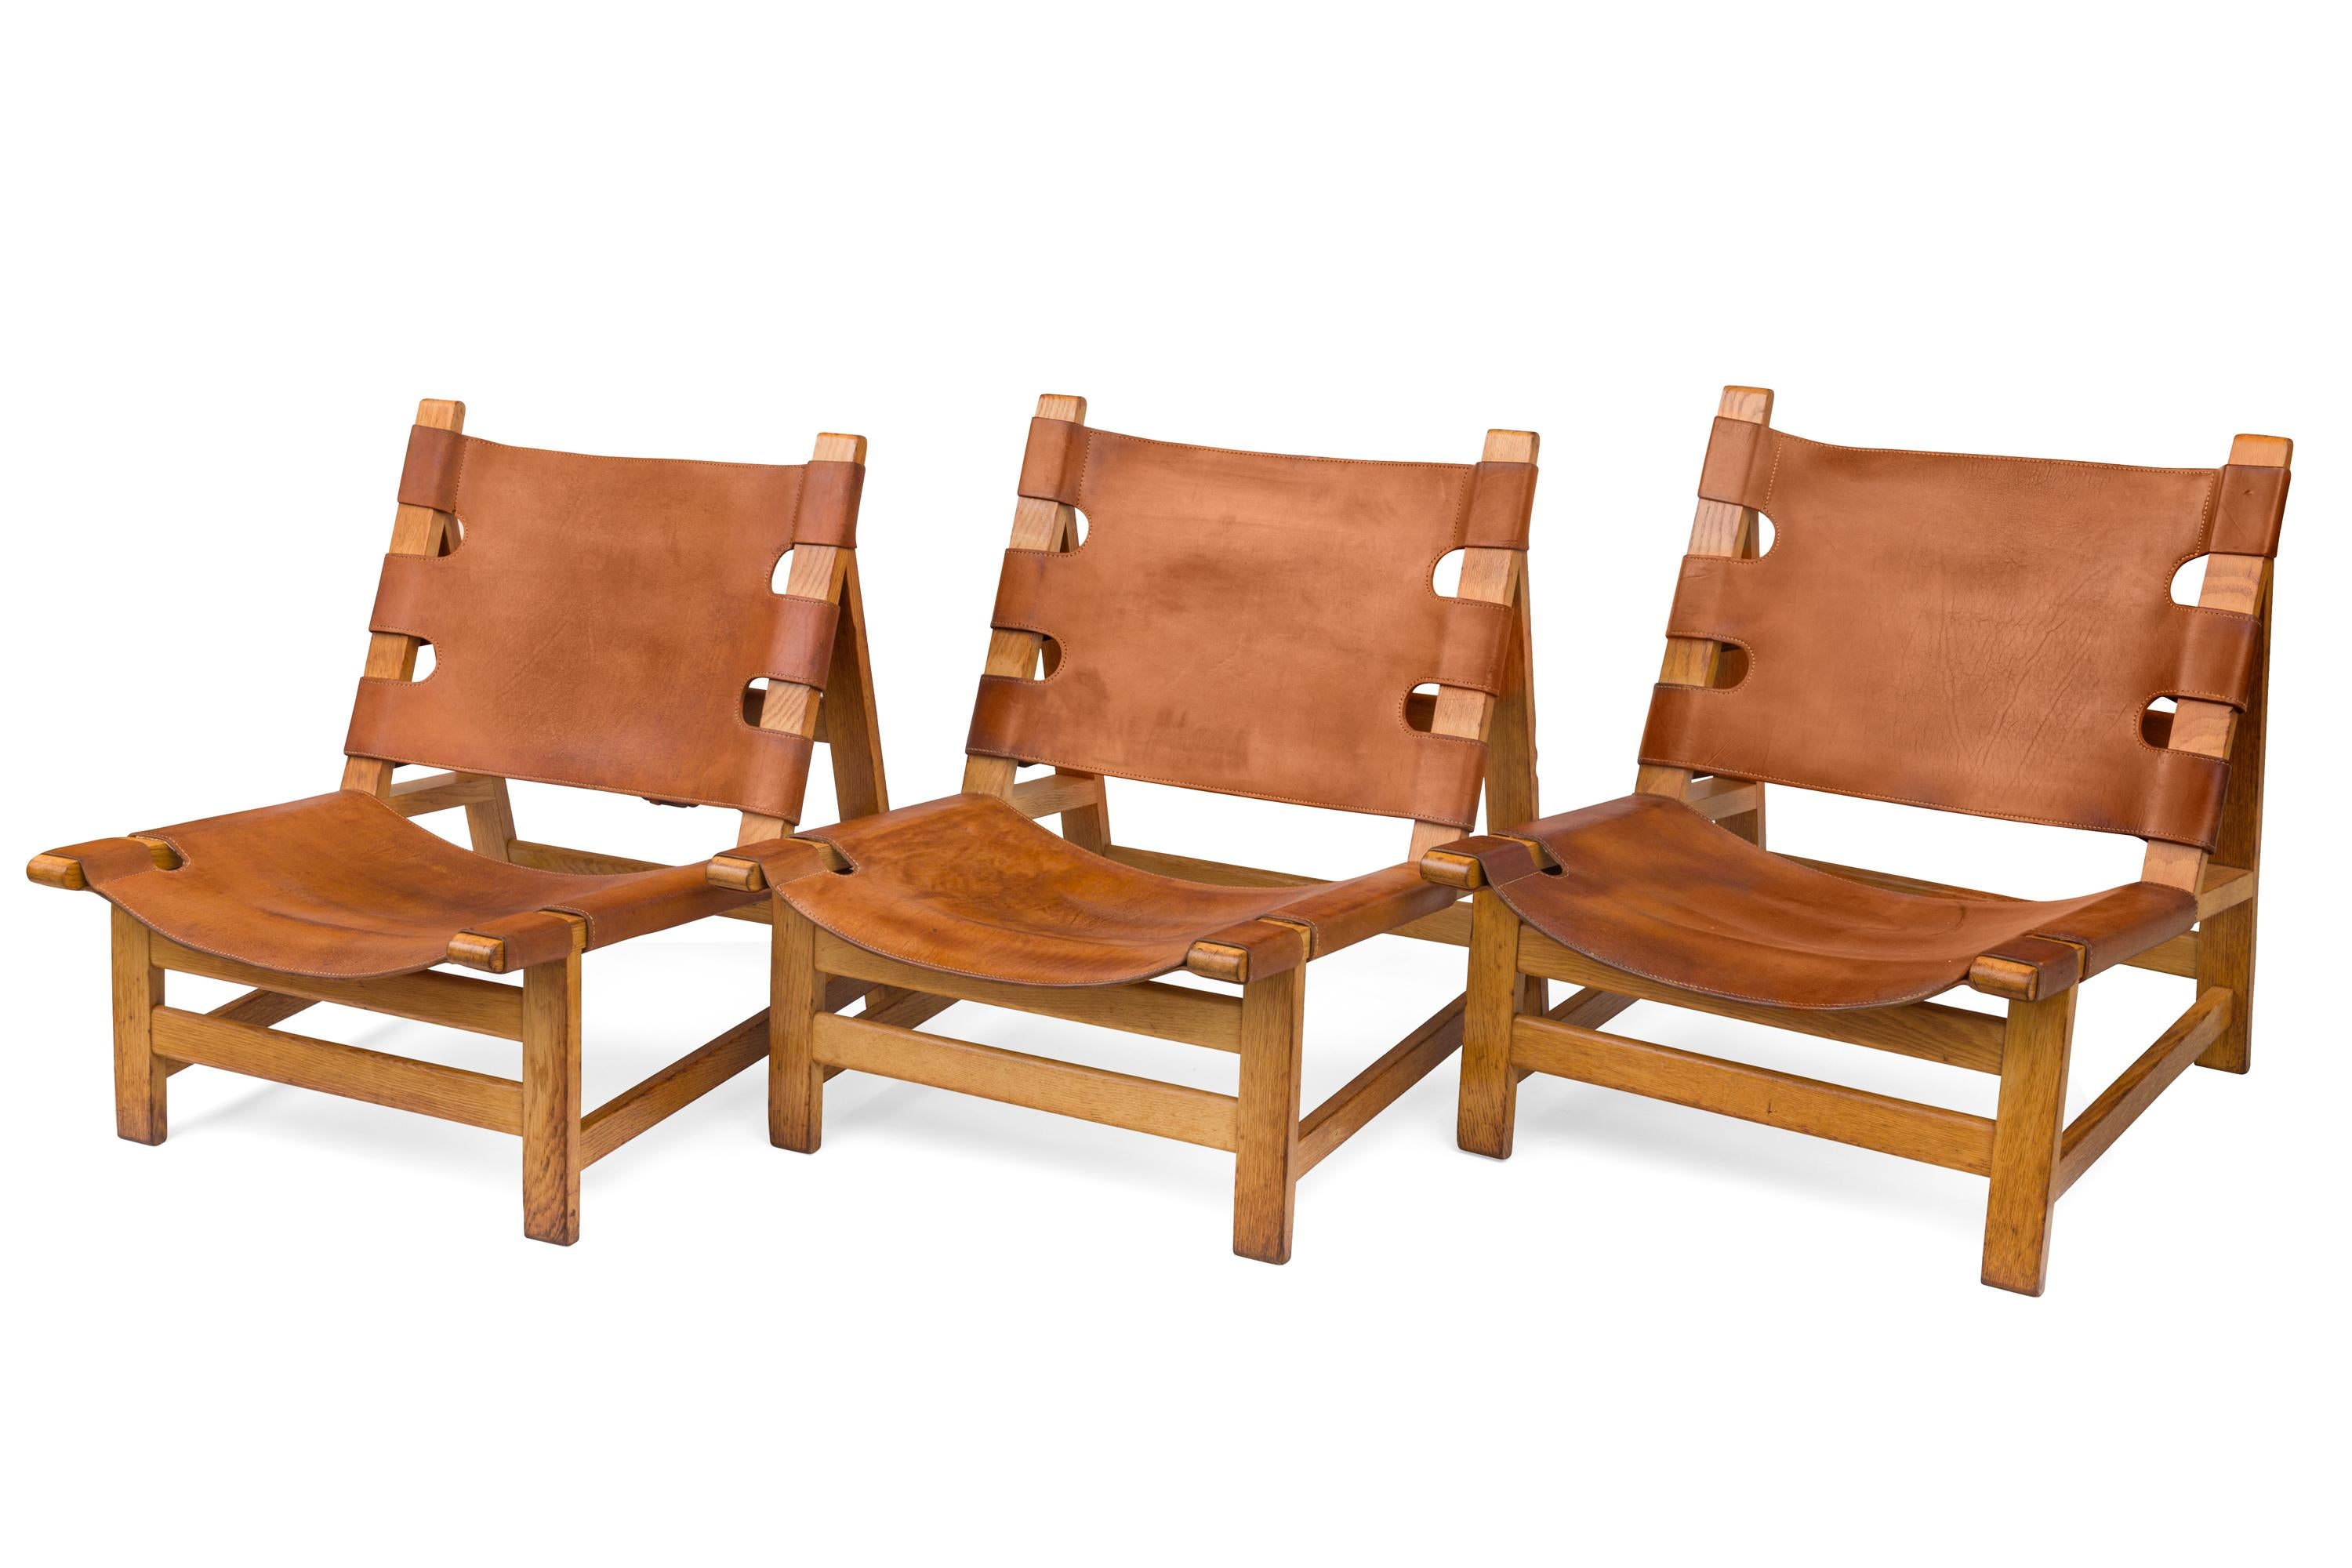 Scandinavian Modern Børge Mogensen Oak and Leather Lounge Chairs, Denmark, 1960s For Sale